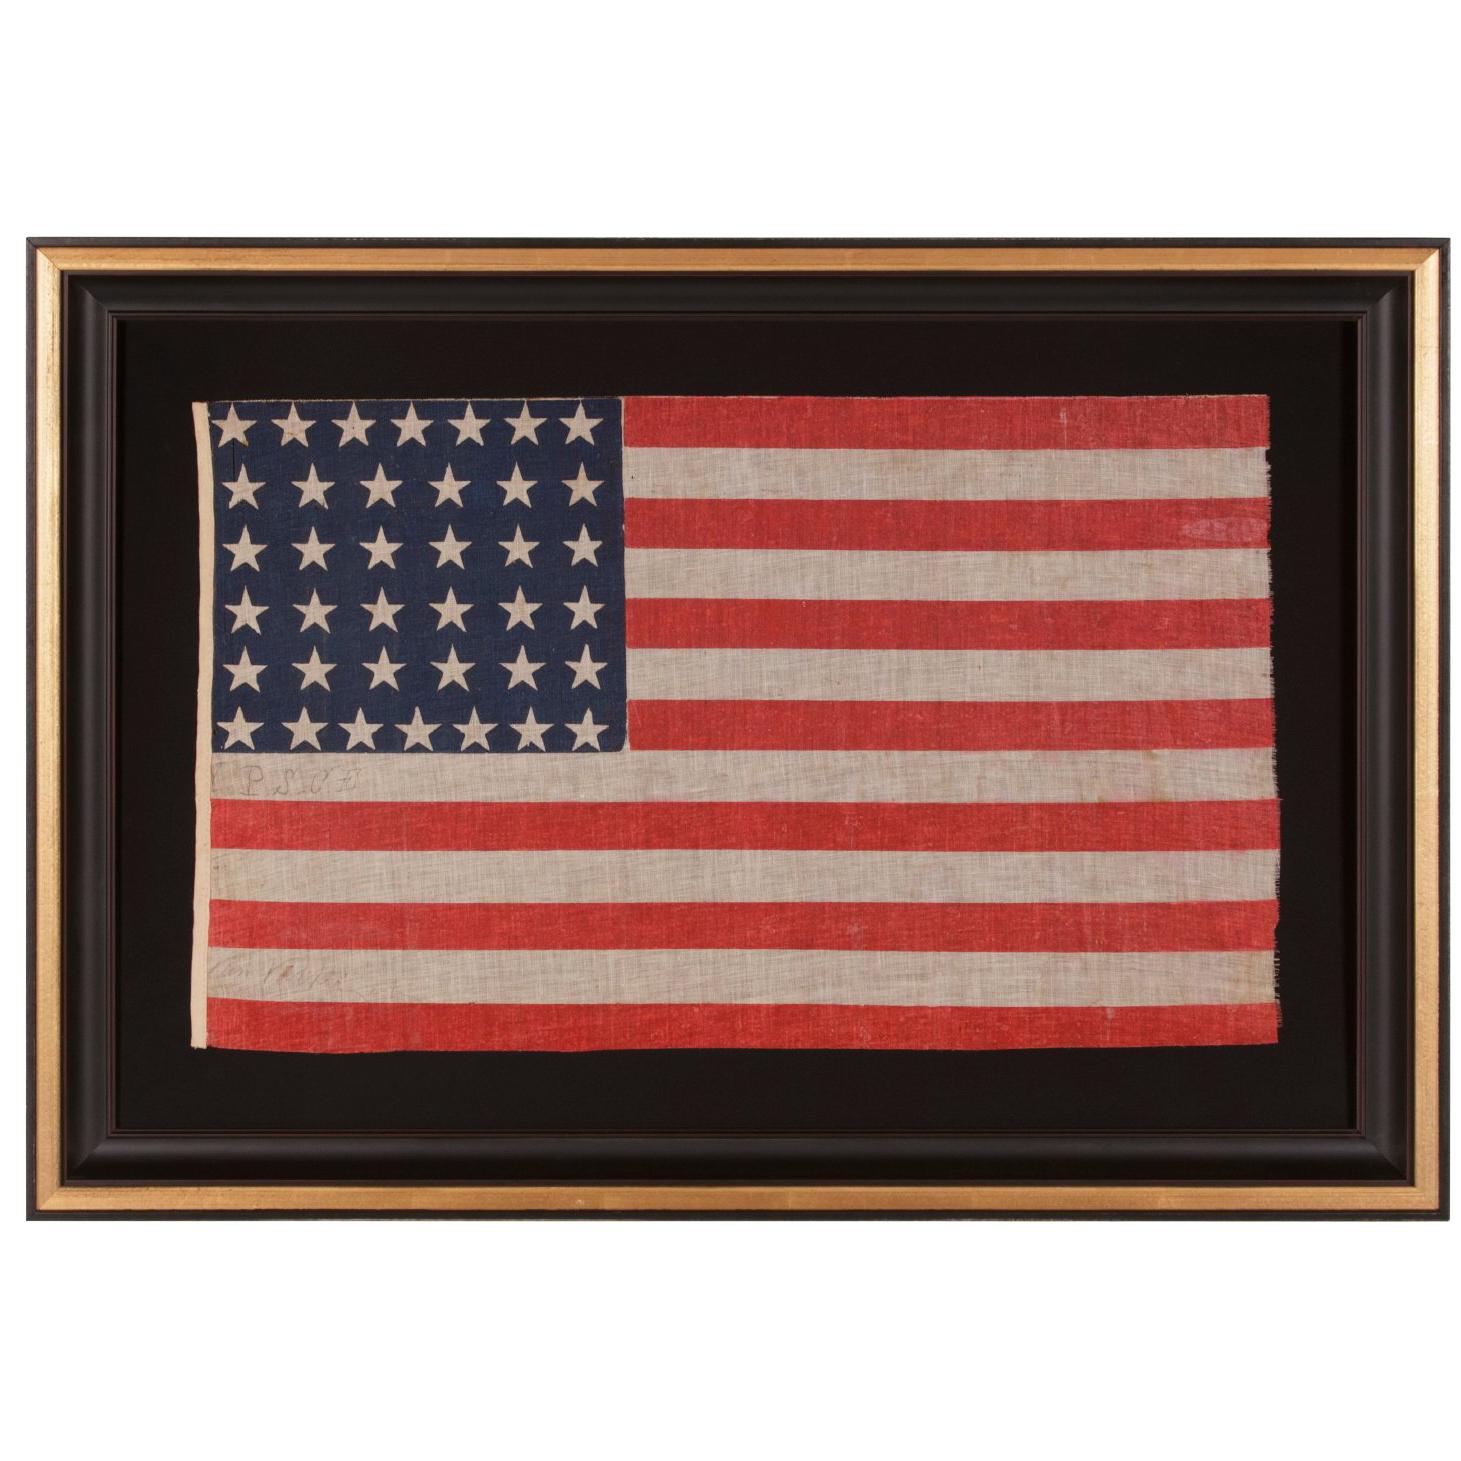 38 Star Antique American Flag, Ex-Richard Pierce Collection